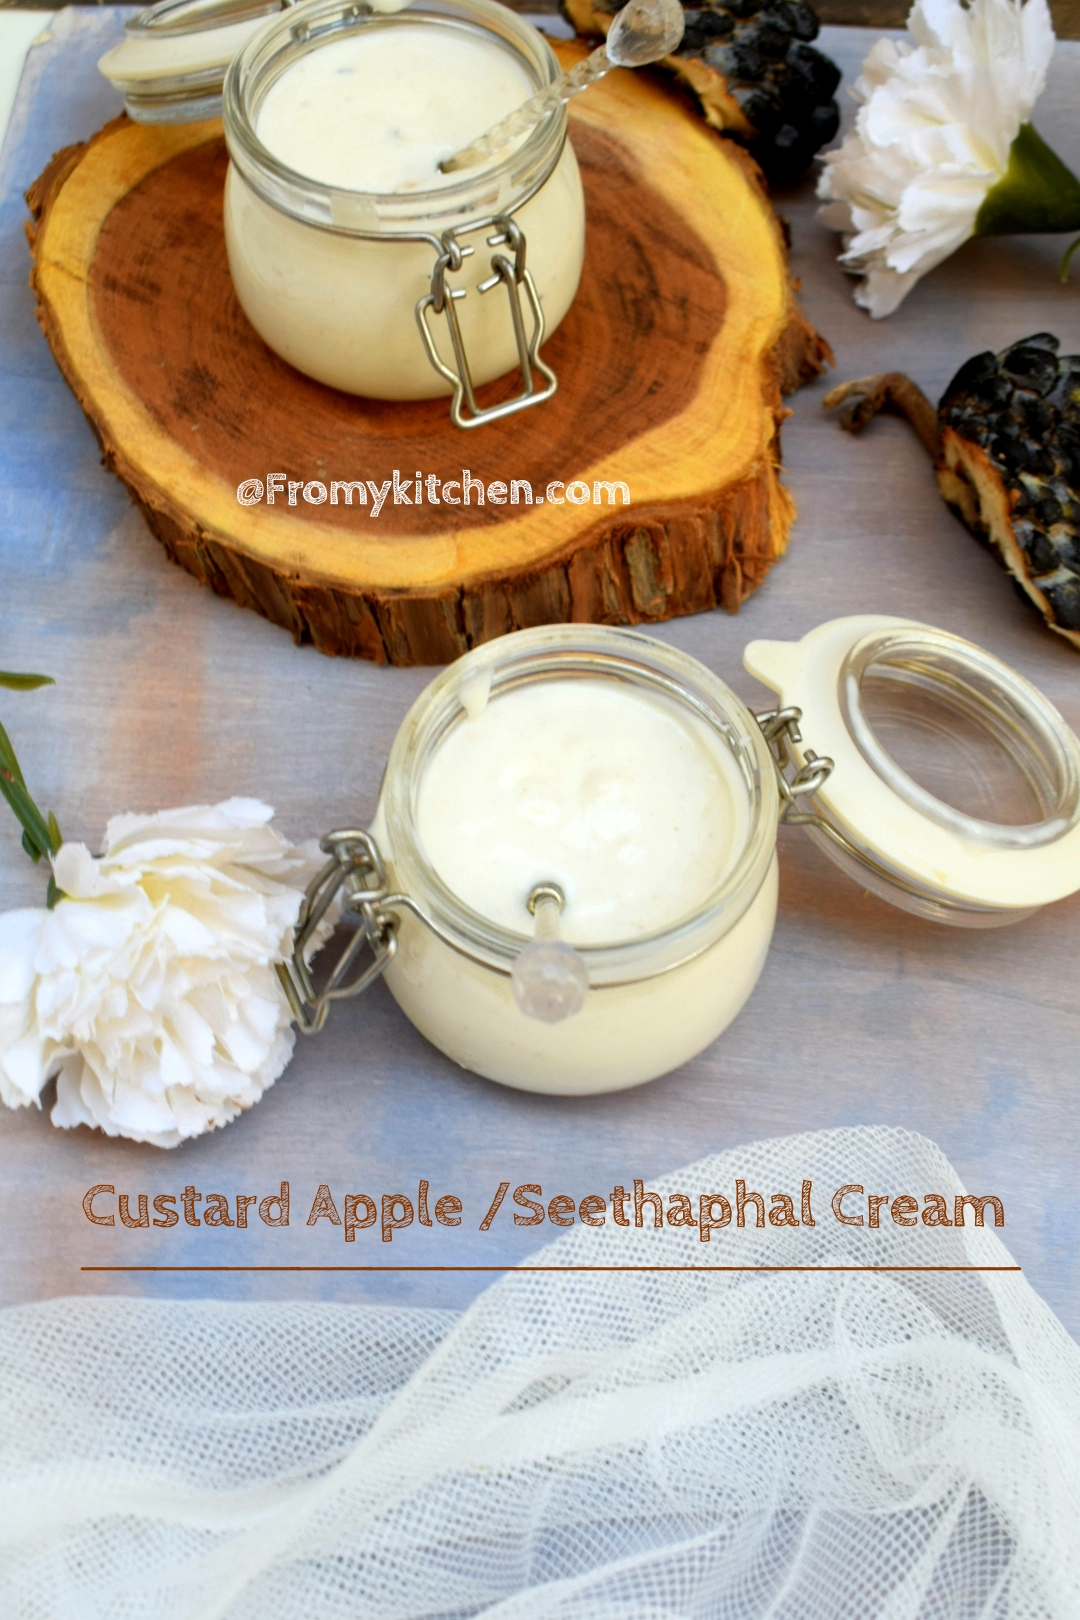 Custard Apple Cream / Seethaphal Cream